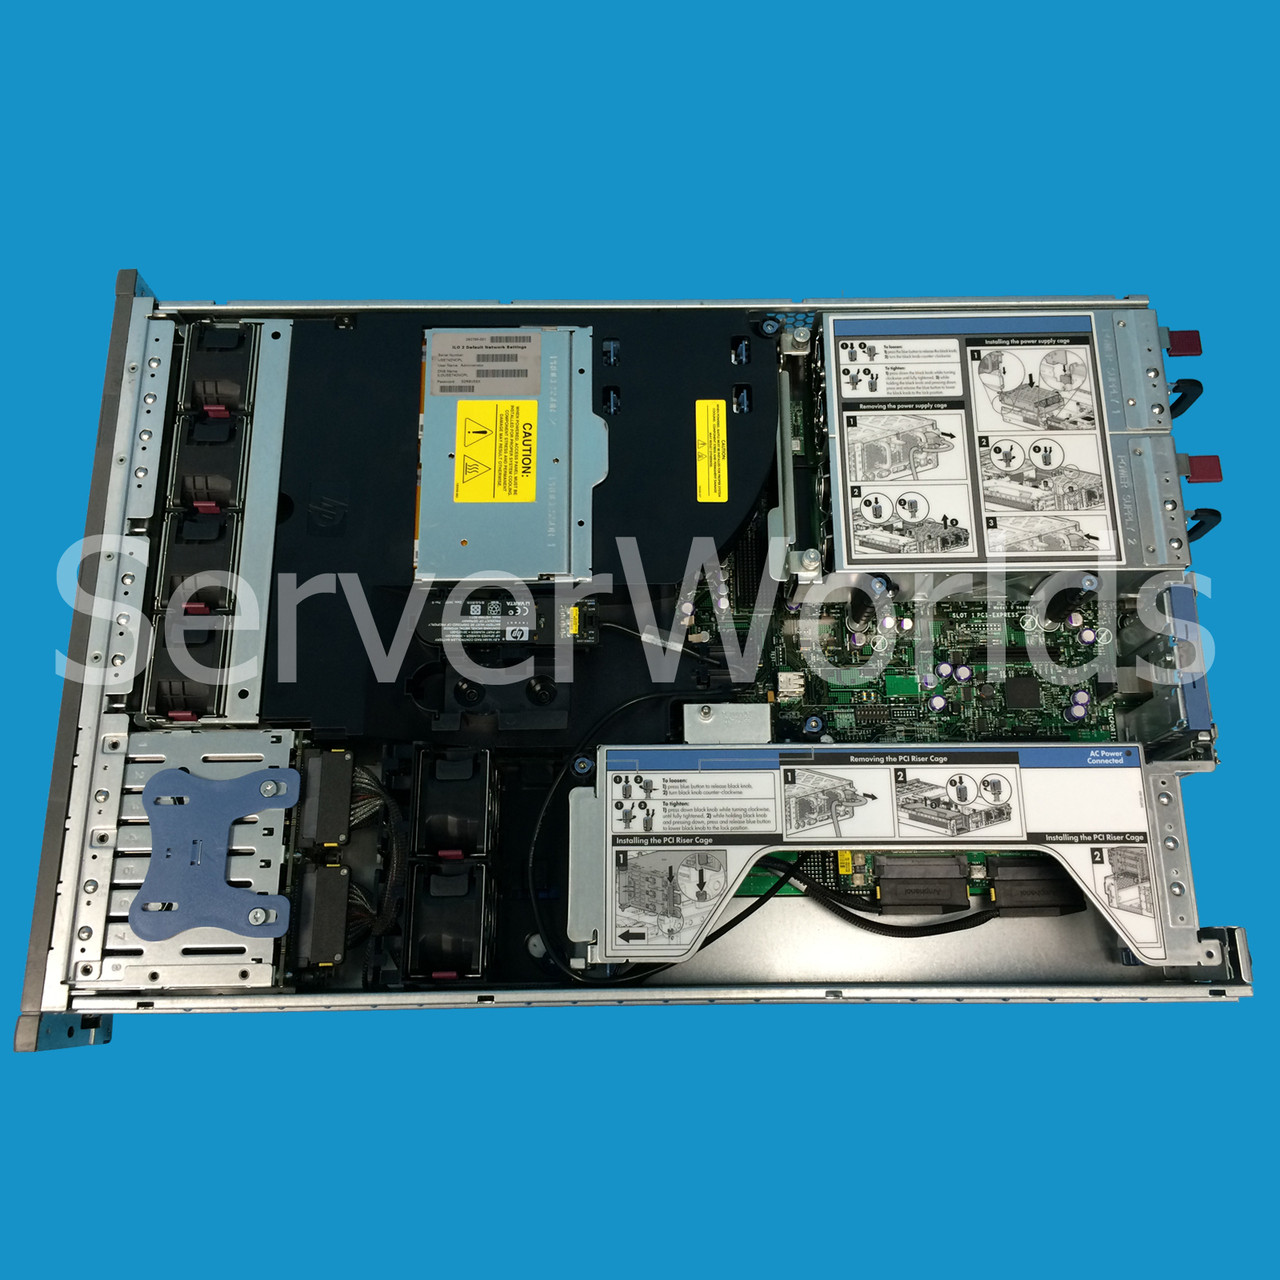 Refurbished HP DL380 G5 QC E5310 1.6Ghz 1GB 433527-001